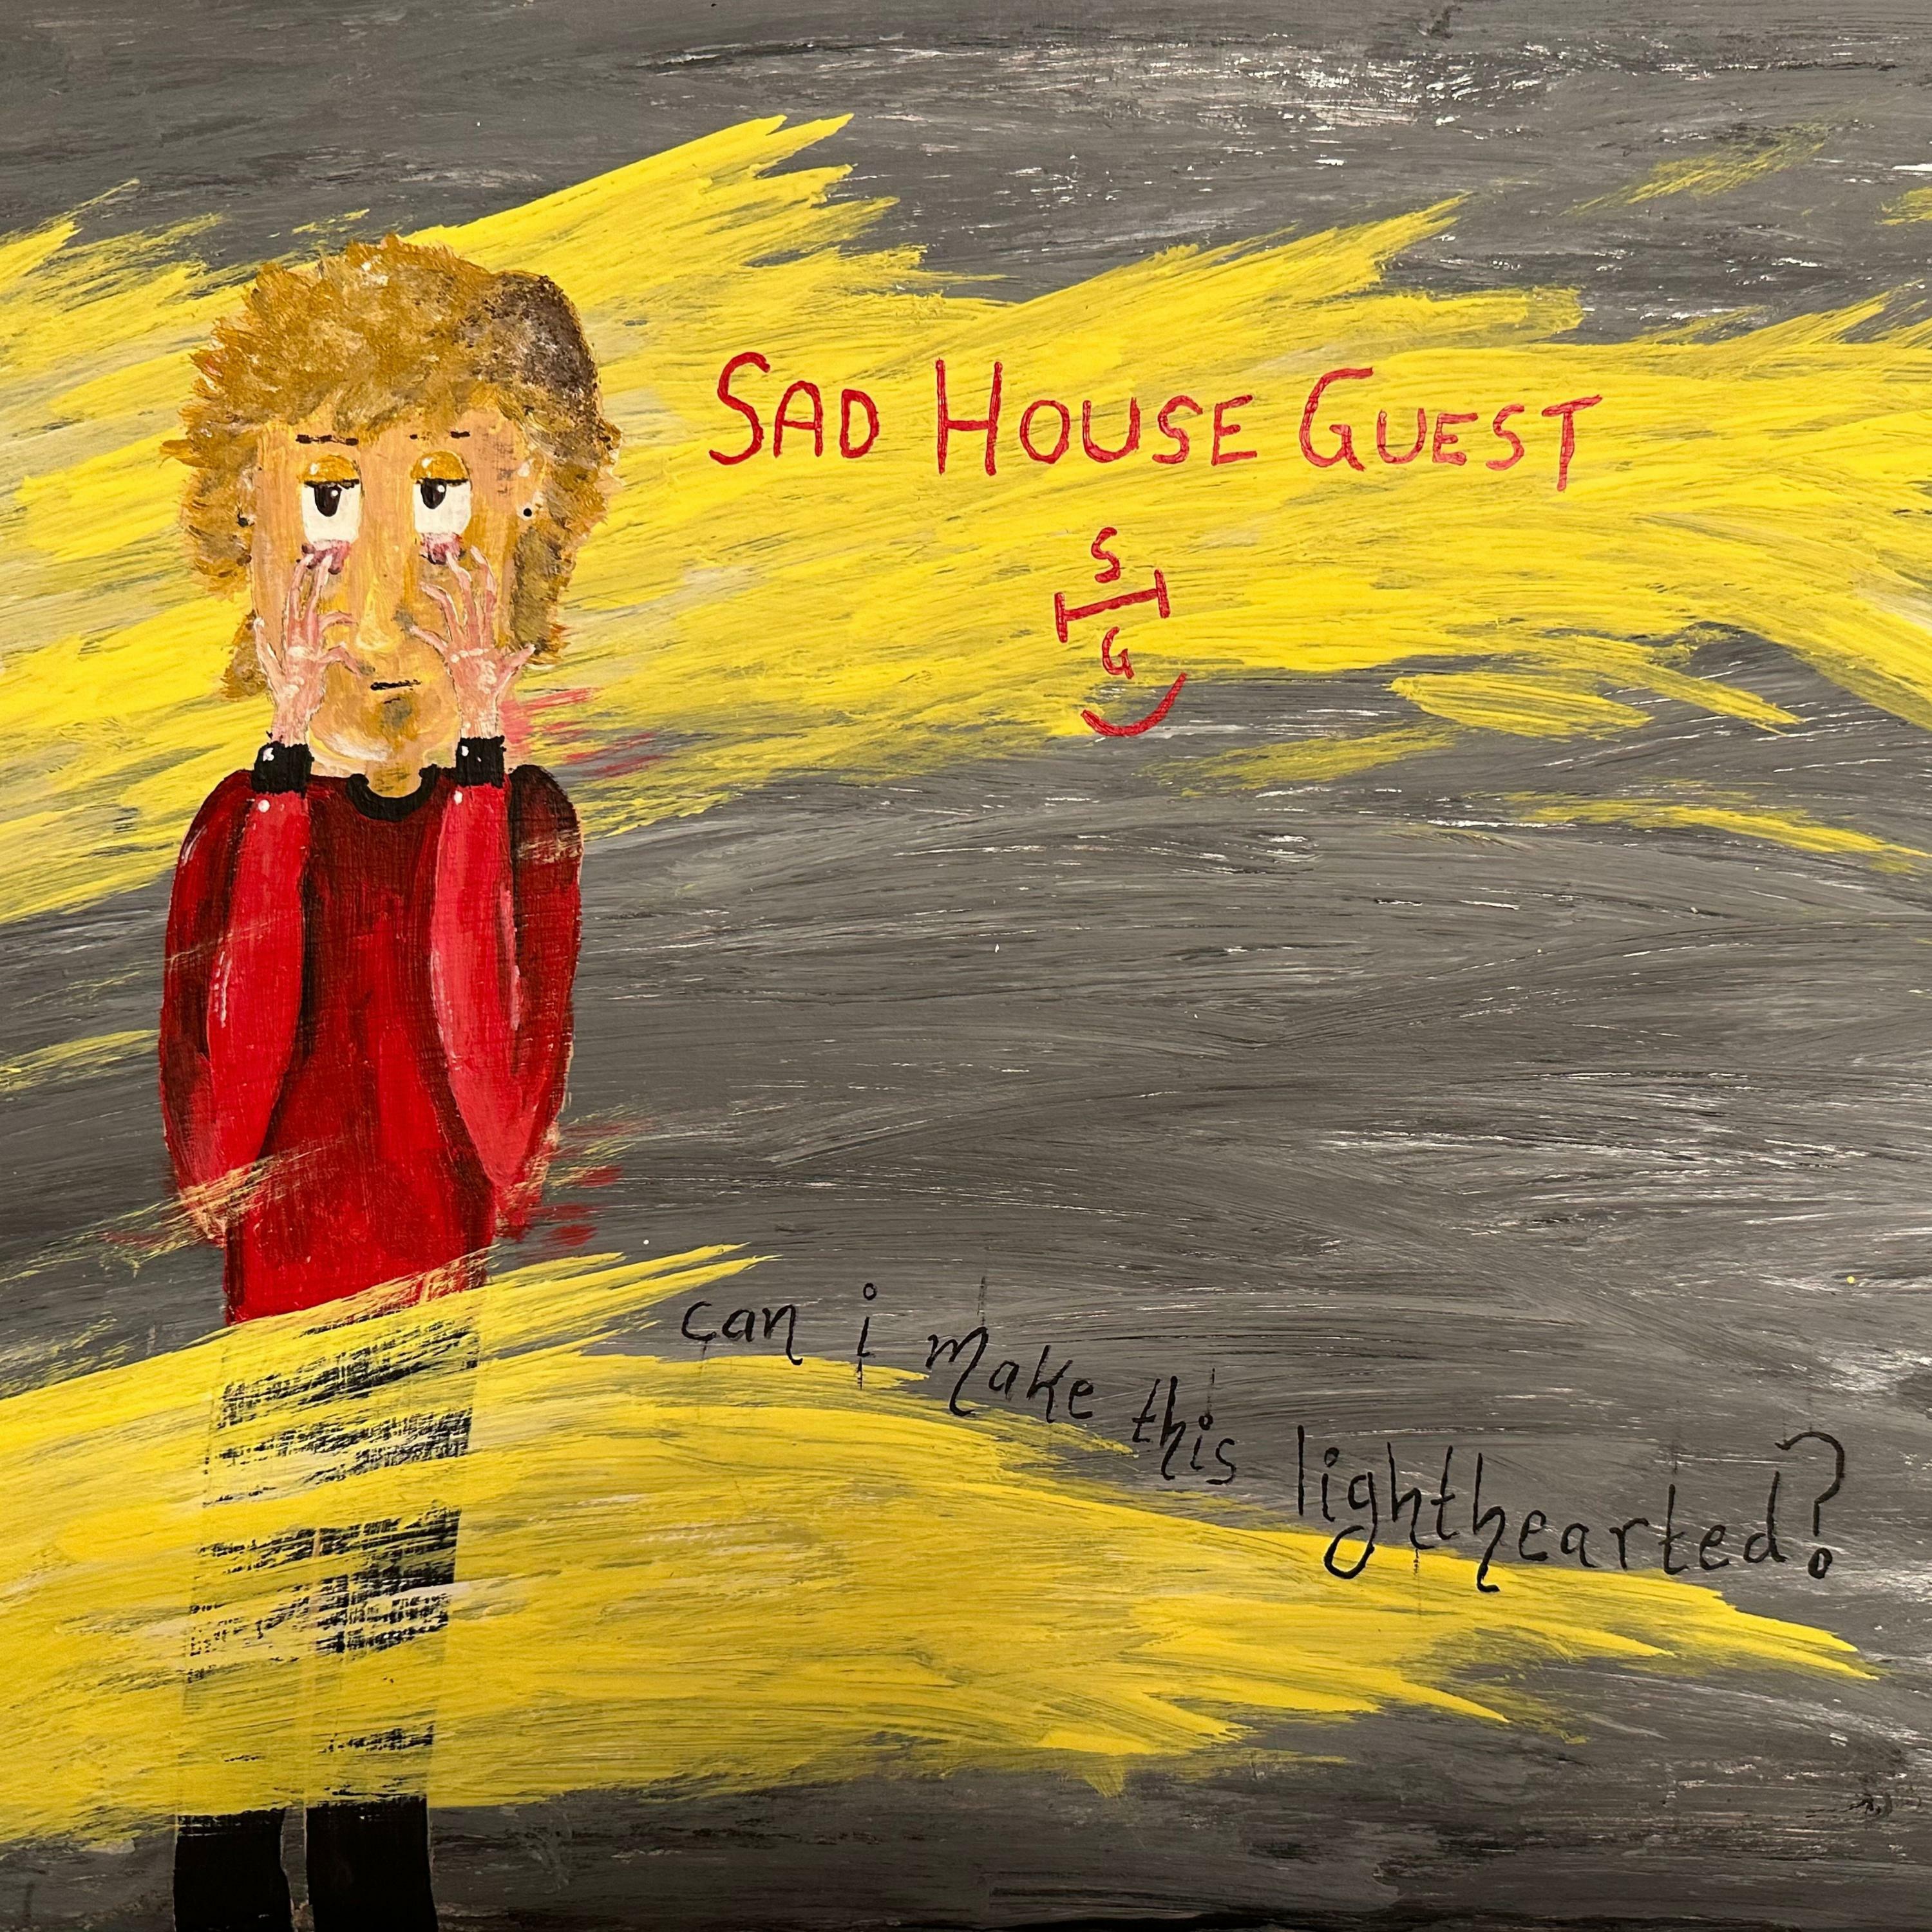 The sad guest